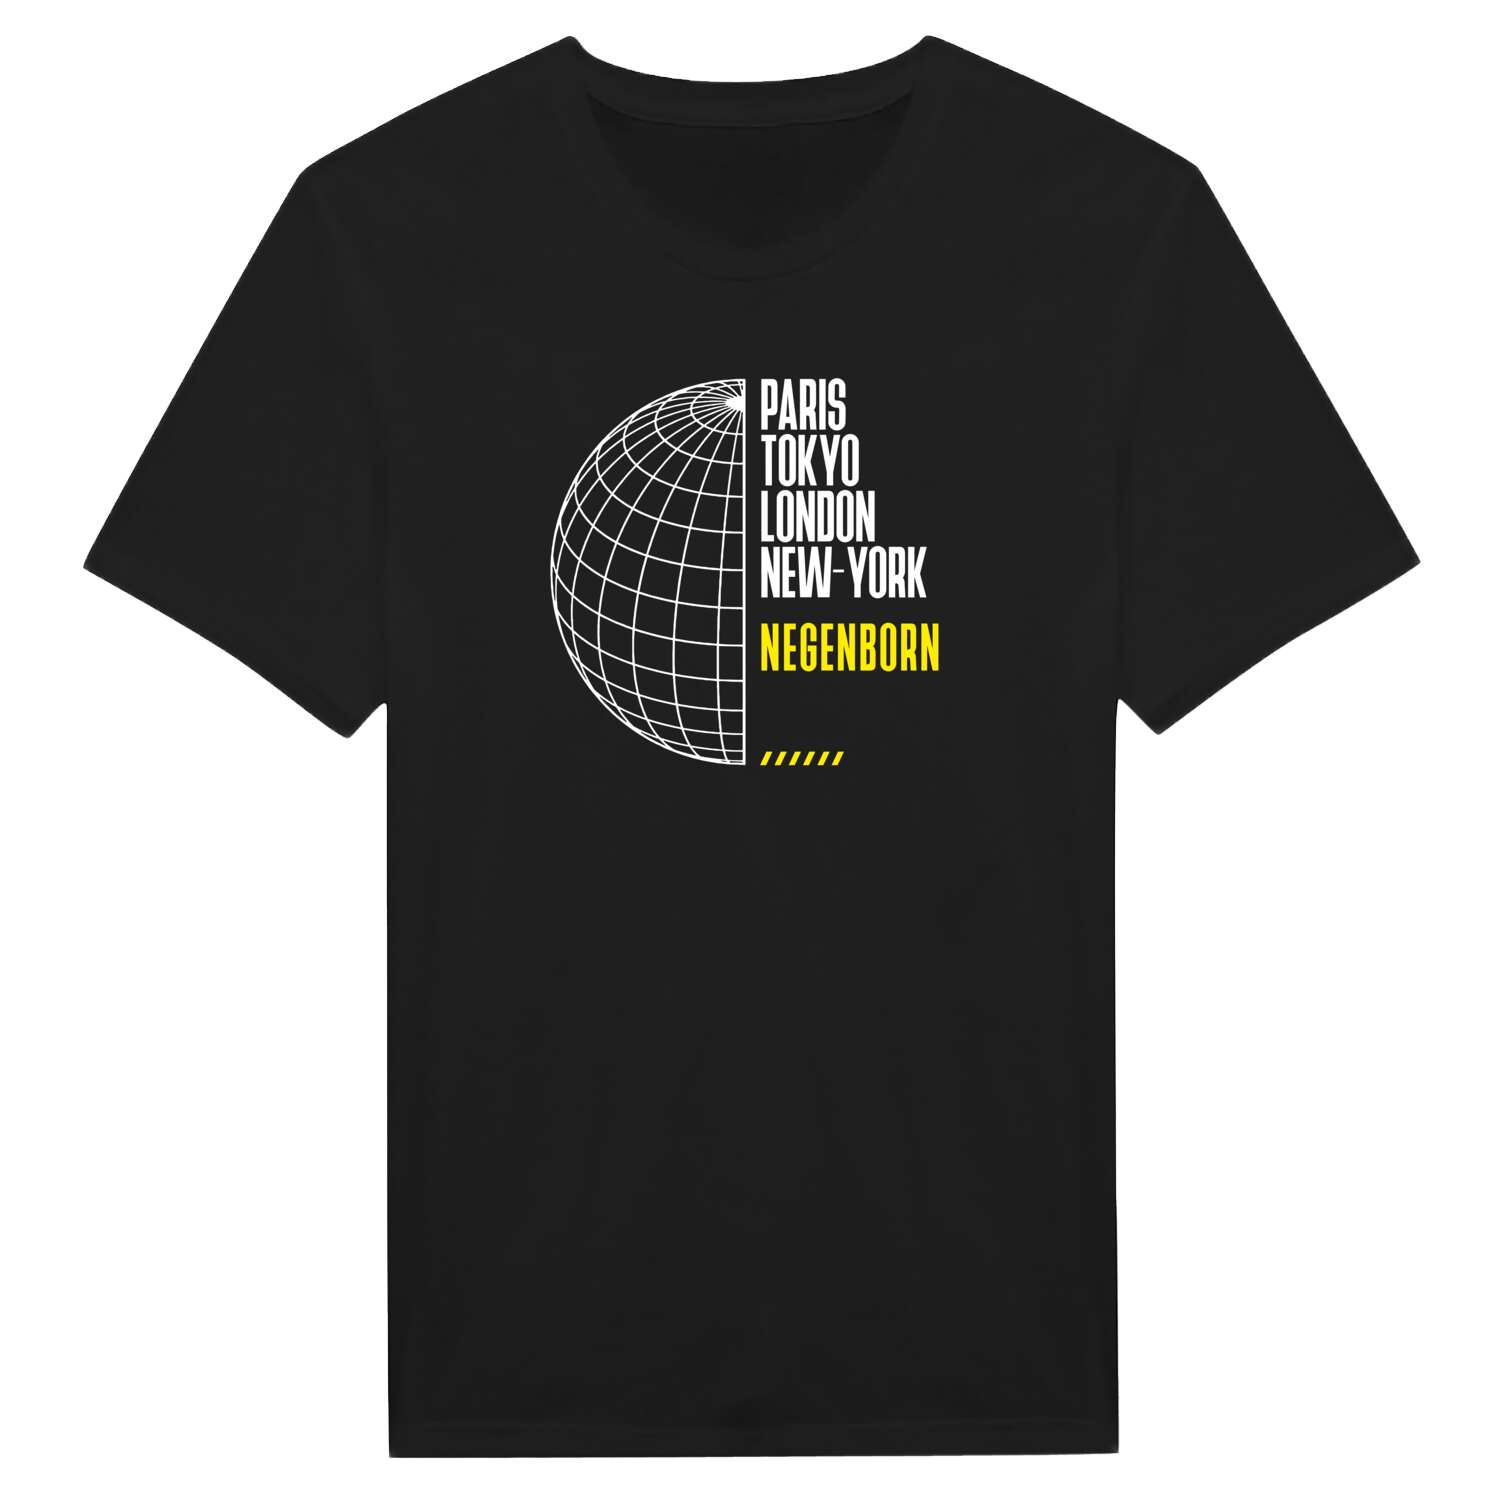 Negenborn T-Shirt »Paris Tokyo London«